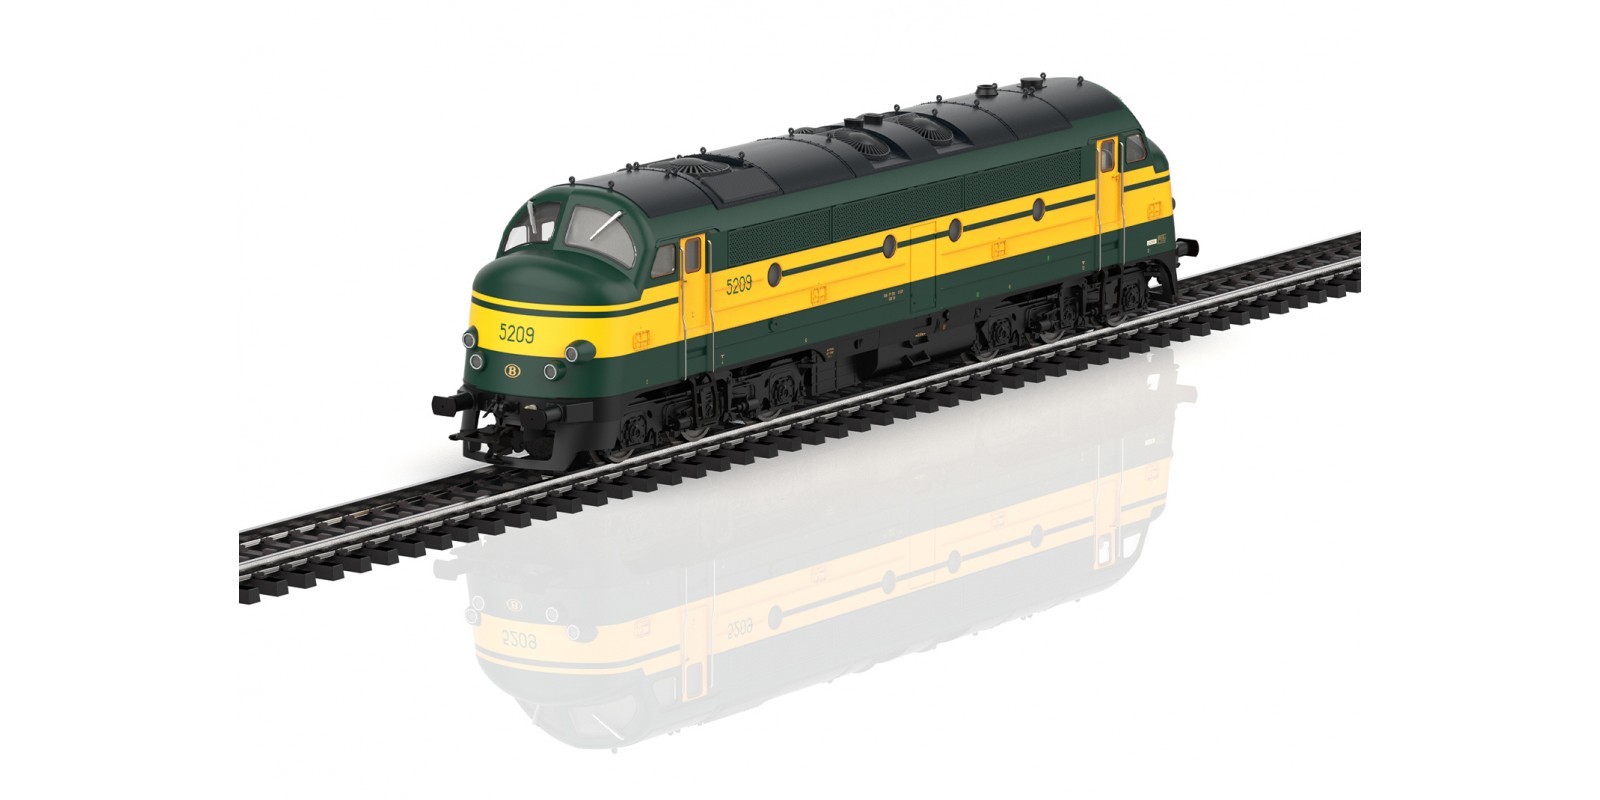 39679 Class 52 Diesel Locomotive